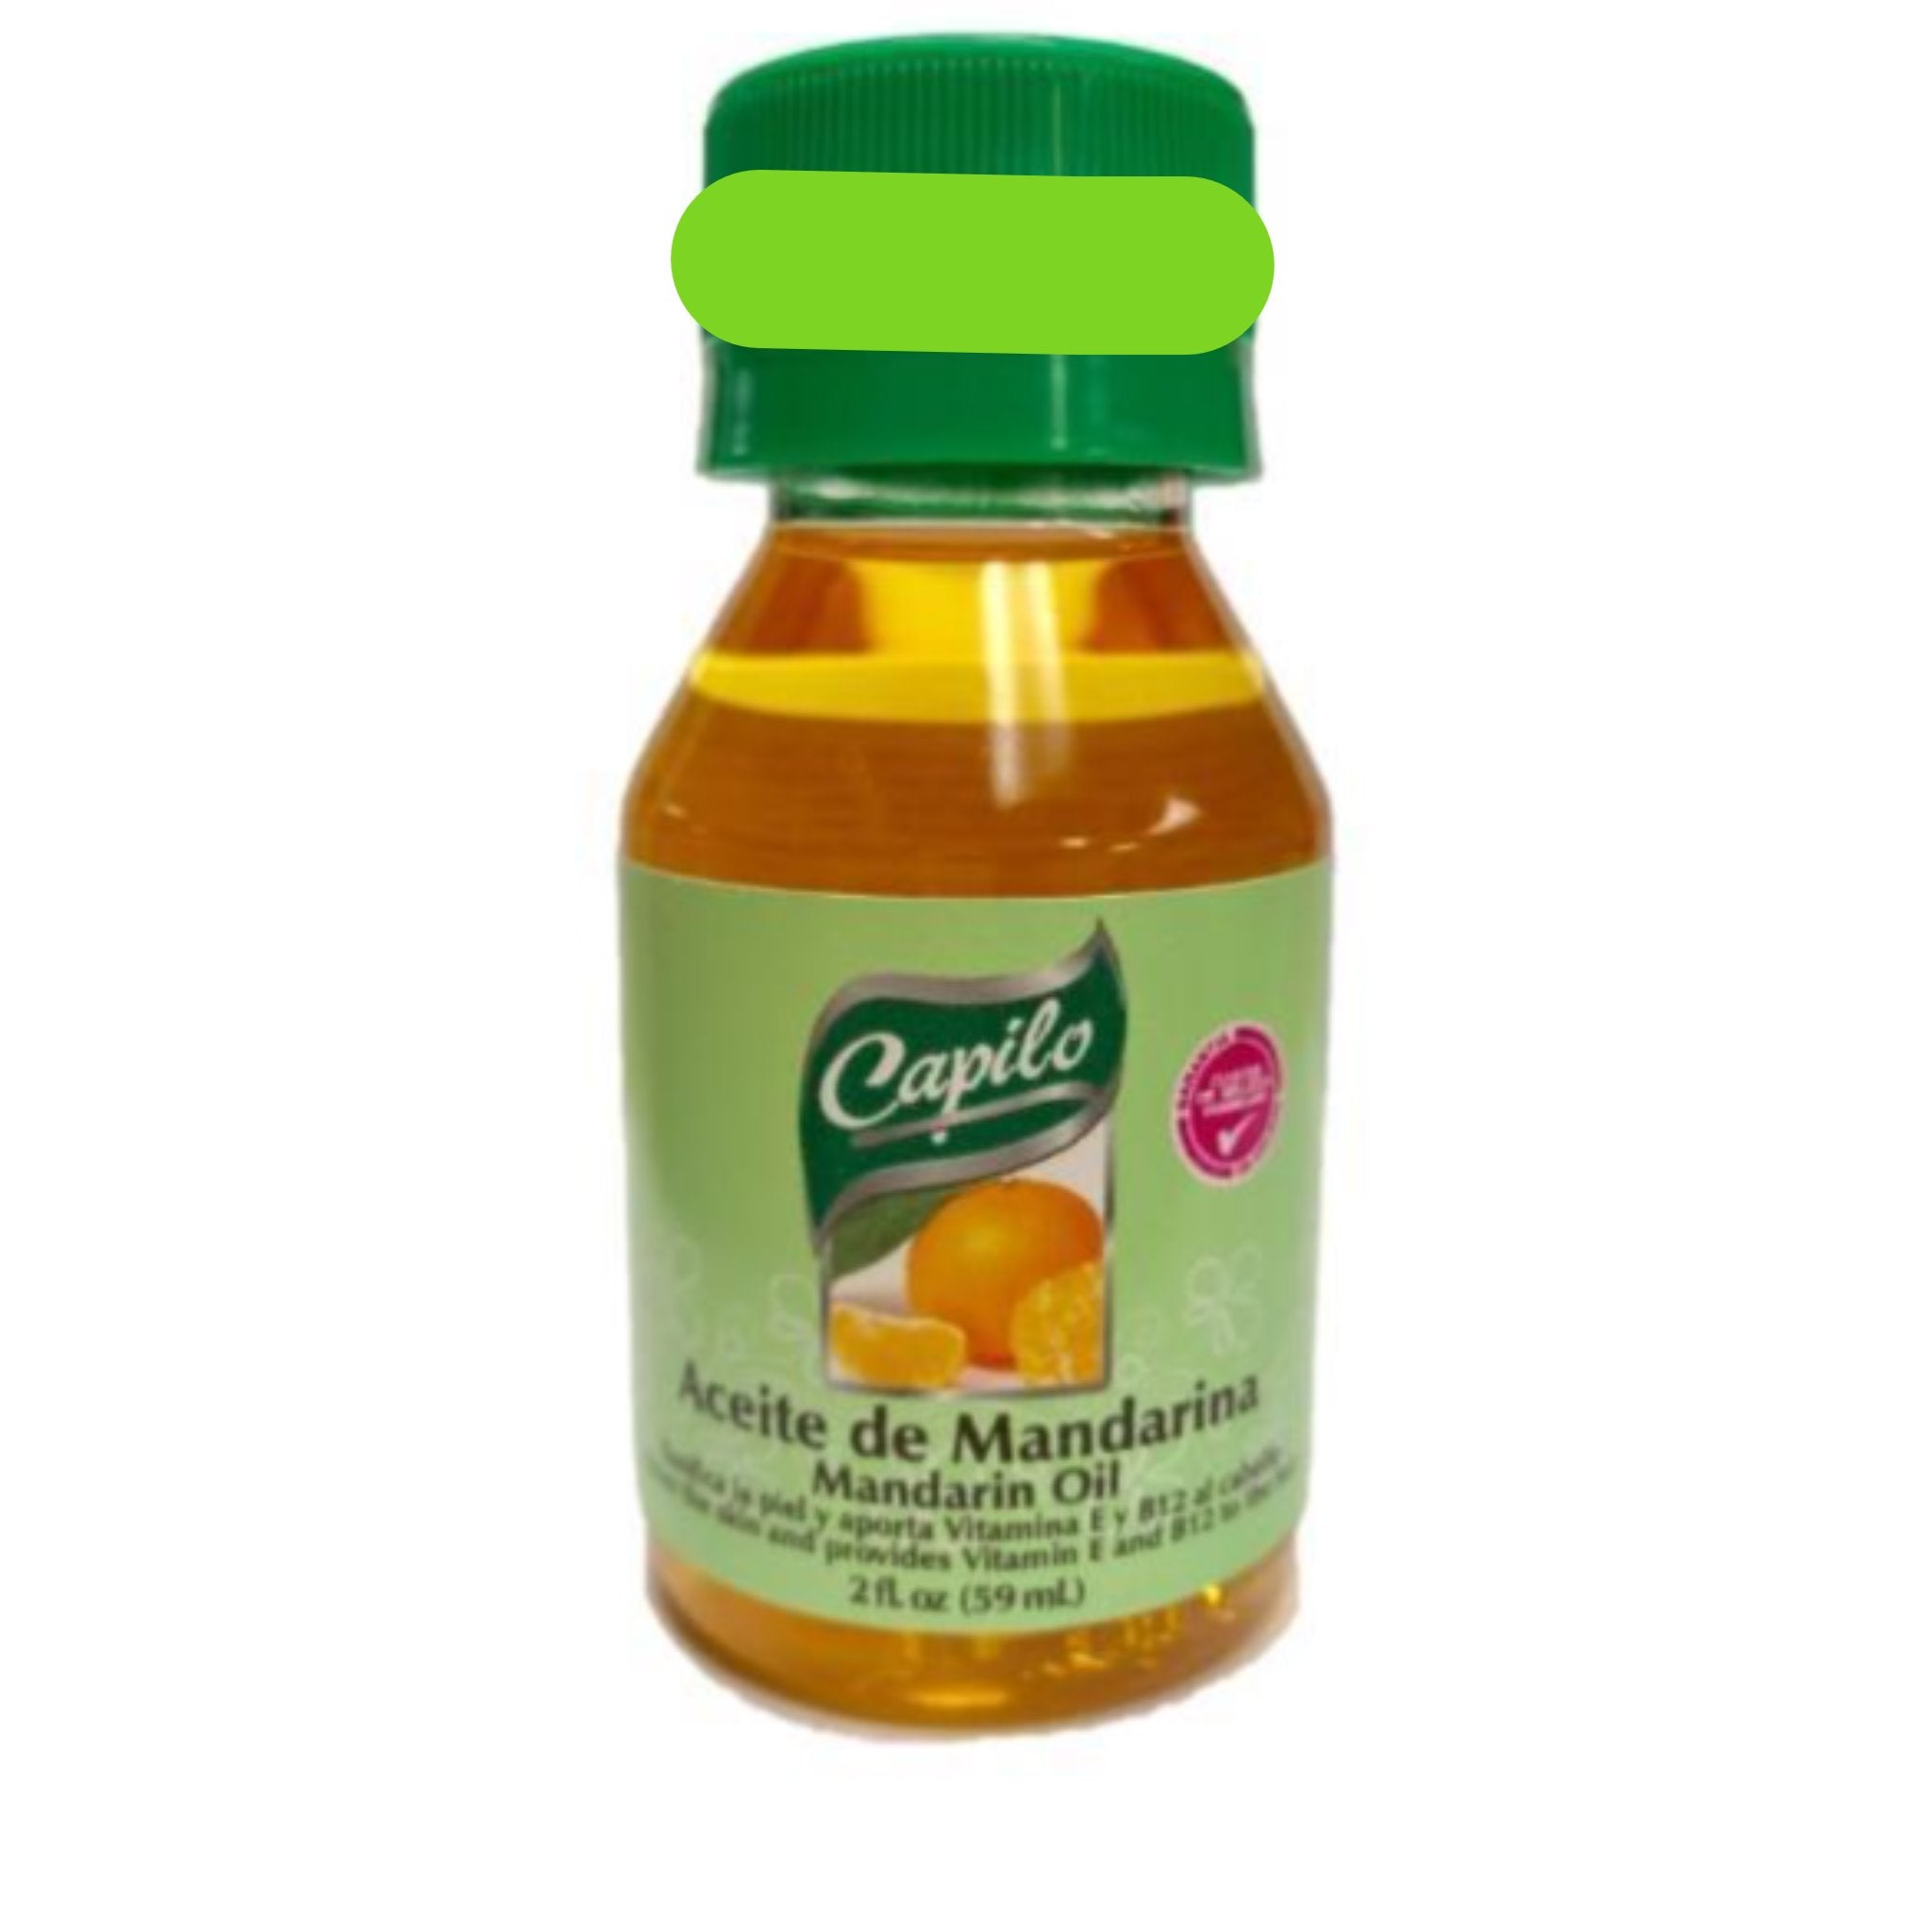 Capilo Tangerine Oil 2 oz